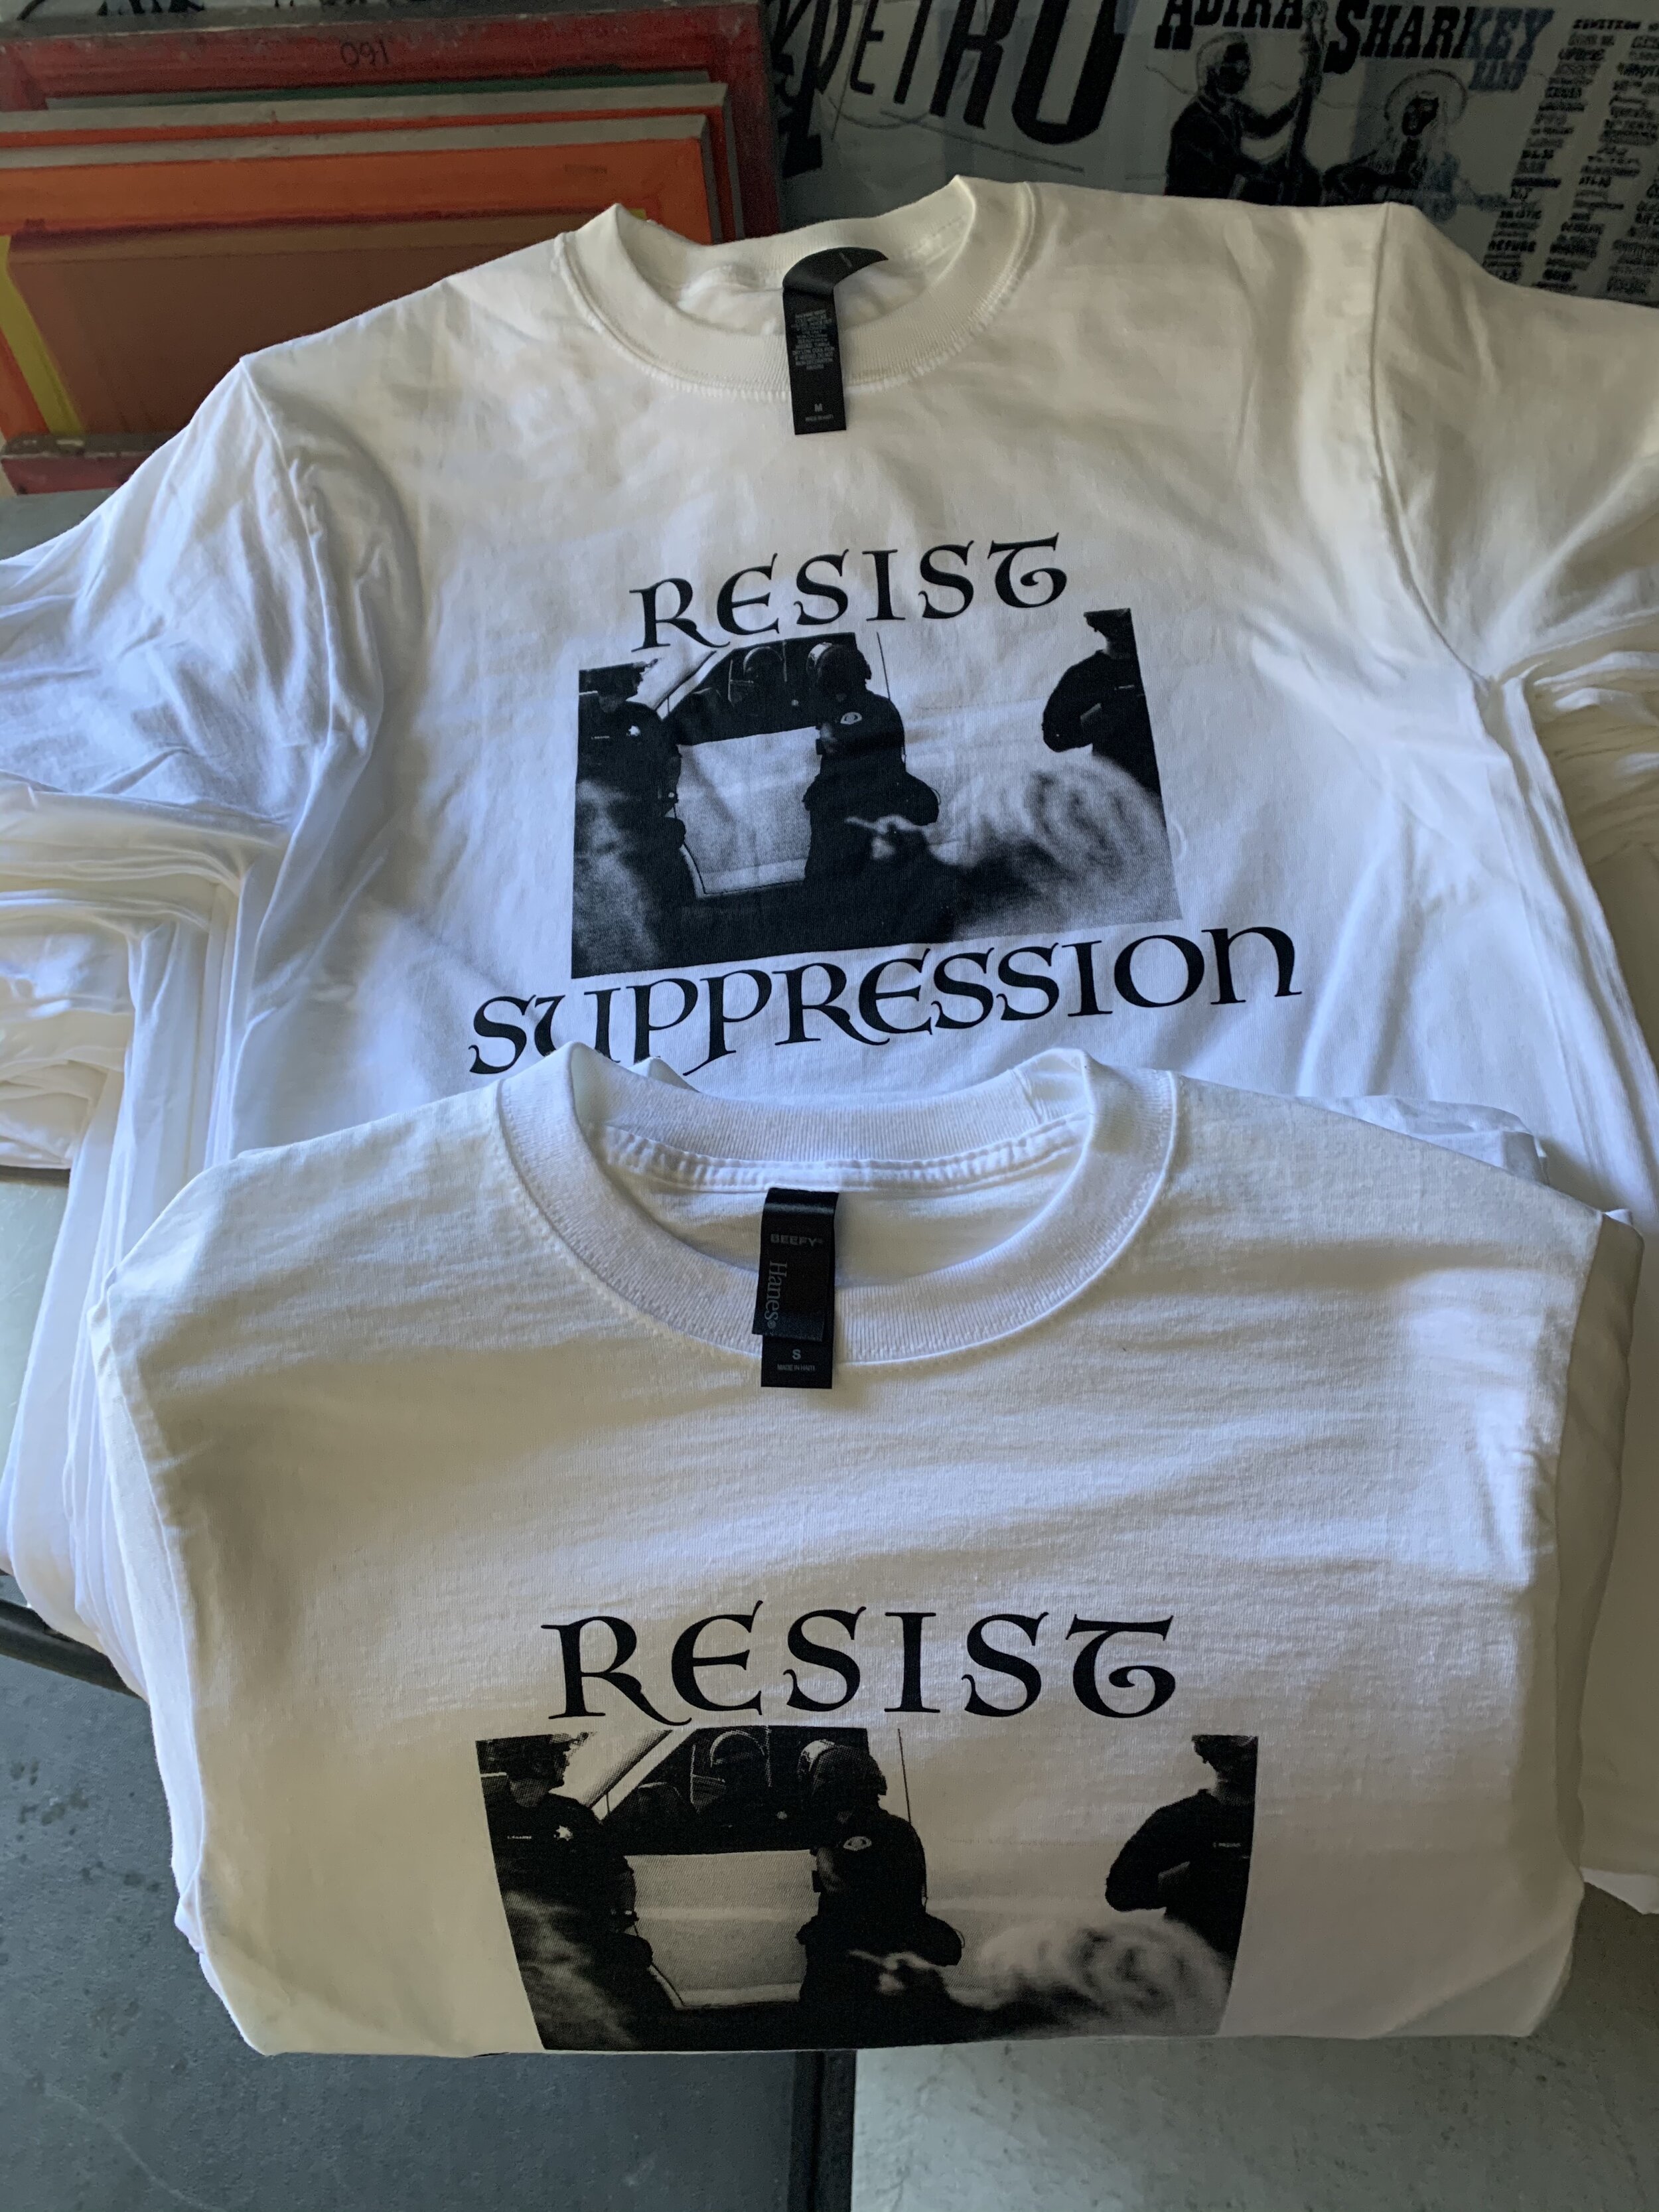 Resist Suppression.jpg